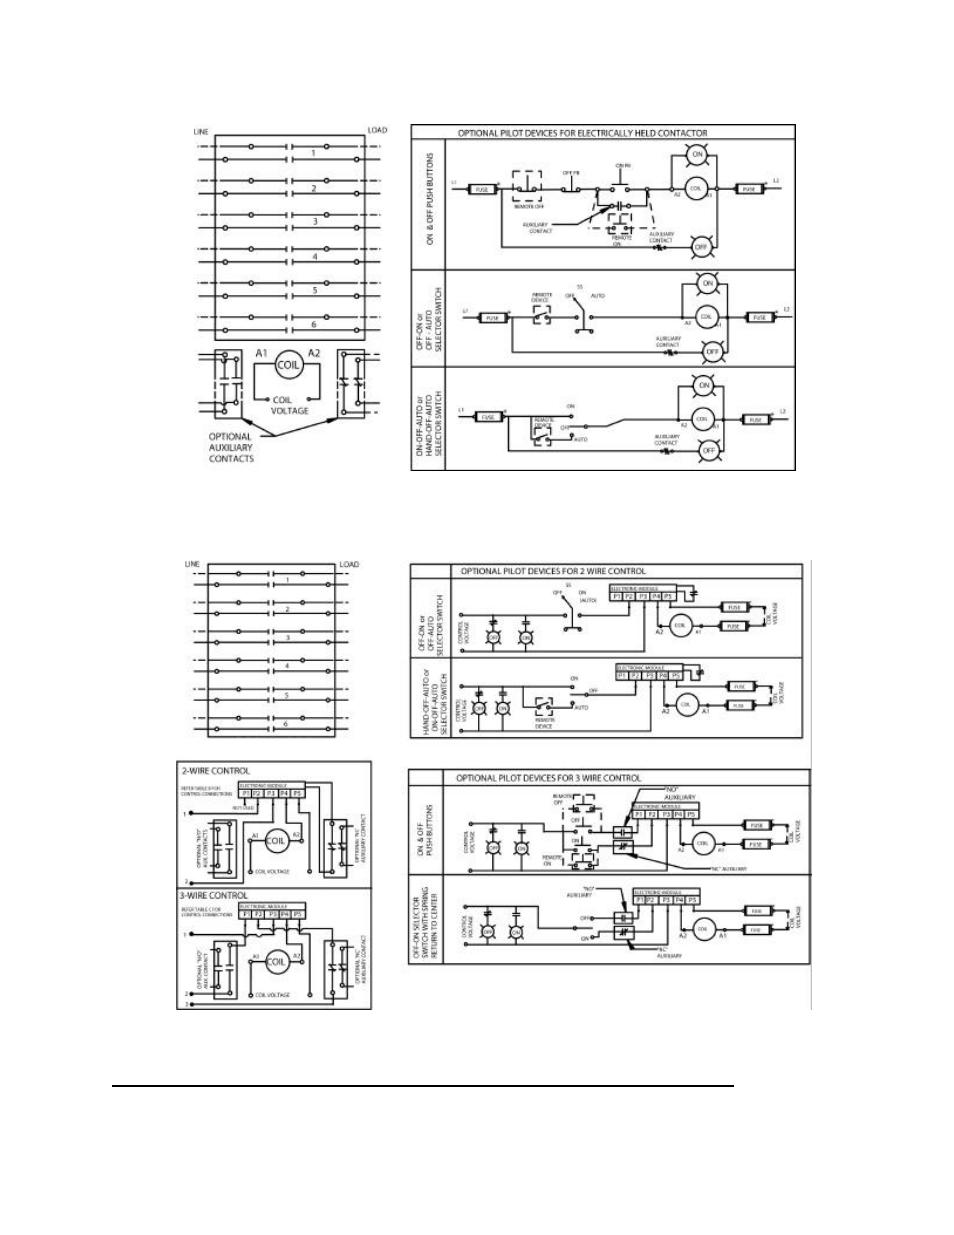 Diagram Eaton Lighting Contactor Wiring Diagram Full Version Hd Quality Wiring Diagram Plasmawiring Pole Prepa Sat Fr